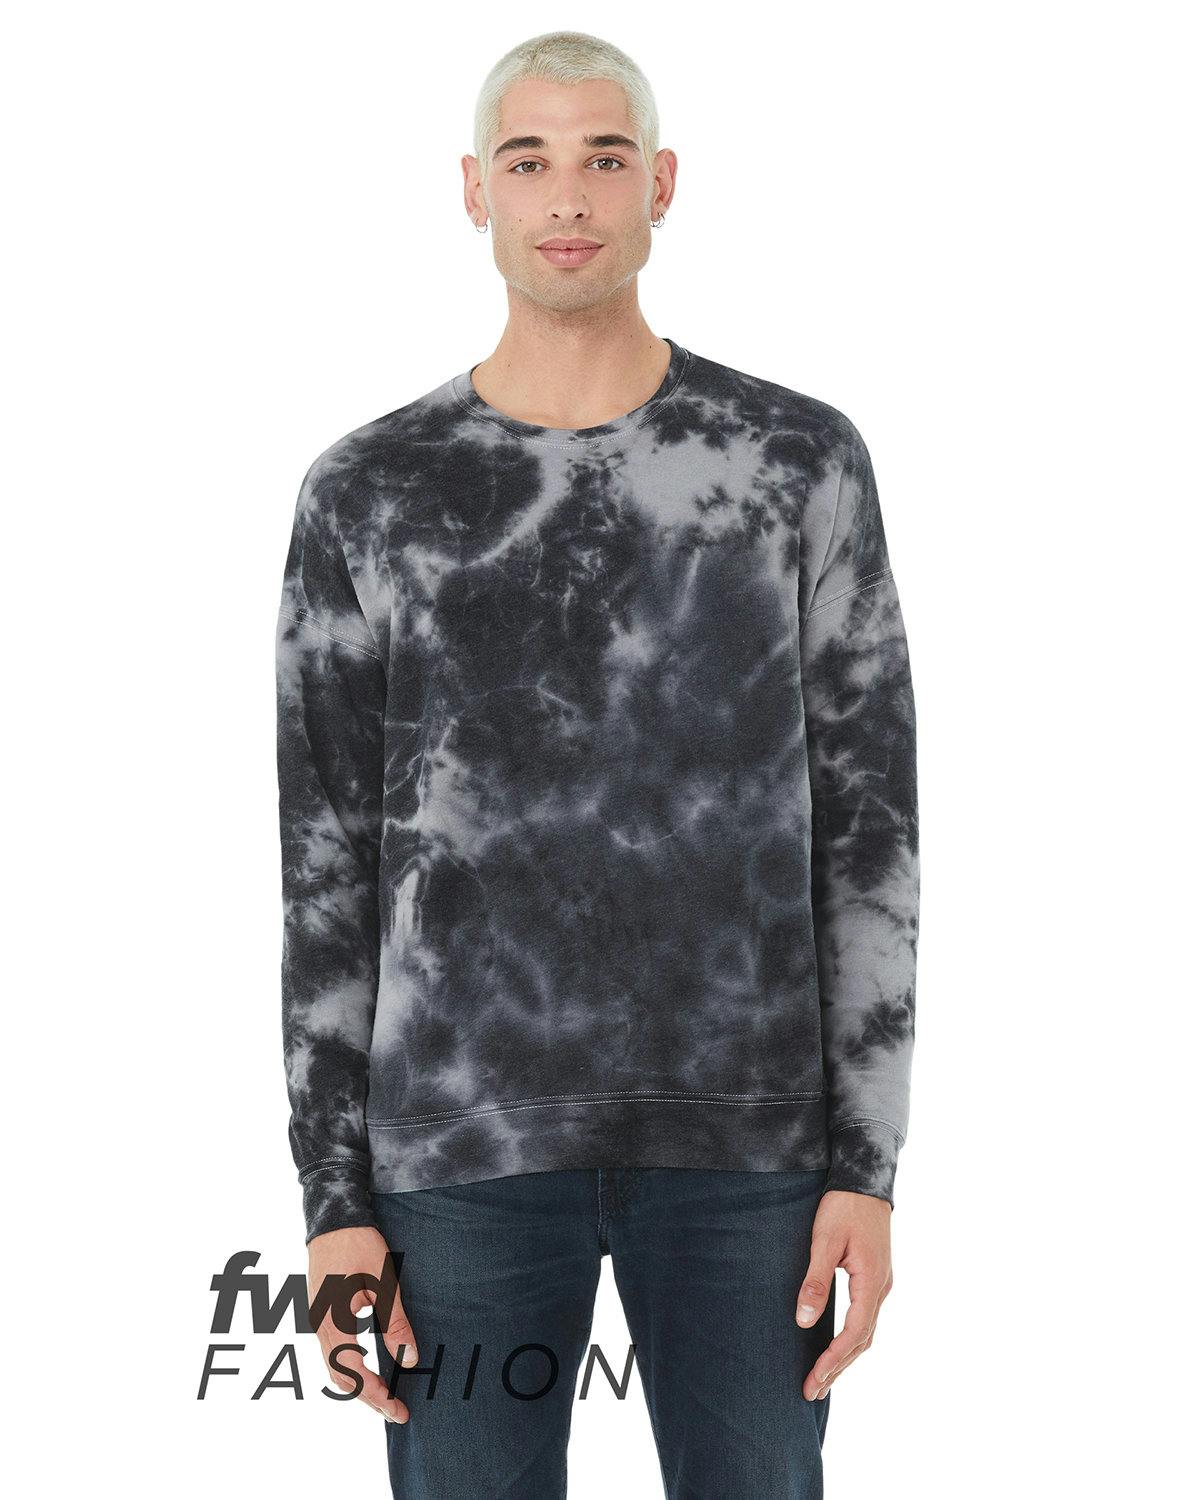 Image for FWD Fashion Unisex Tie-Dye Pullover Sweatshirt